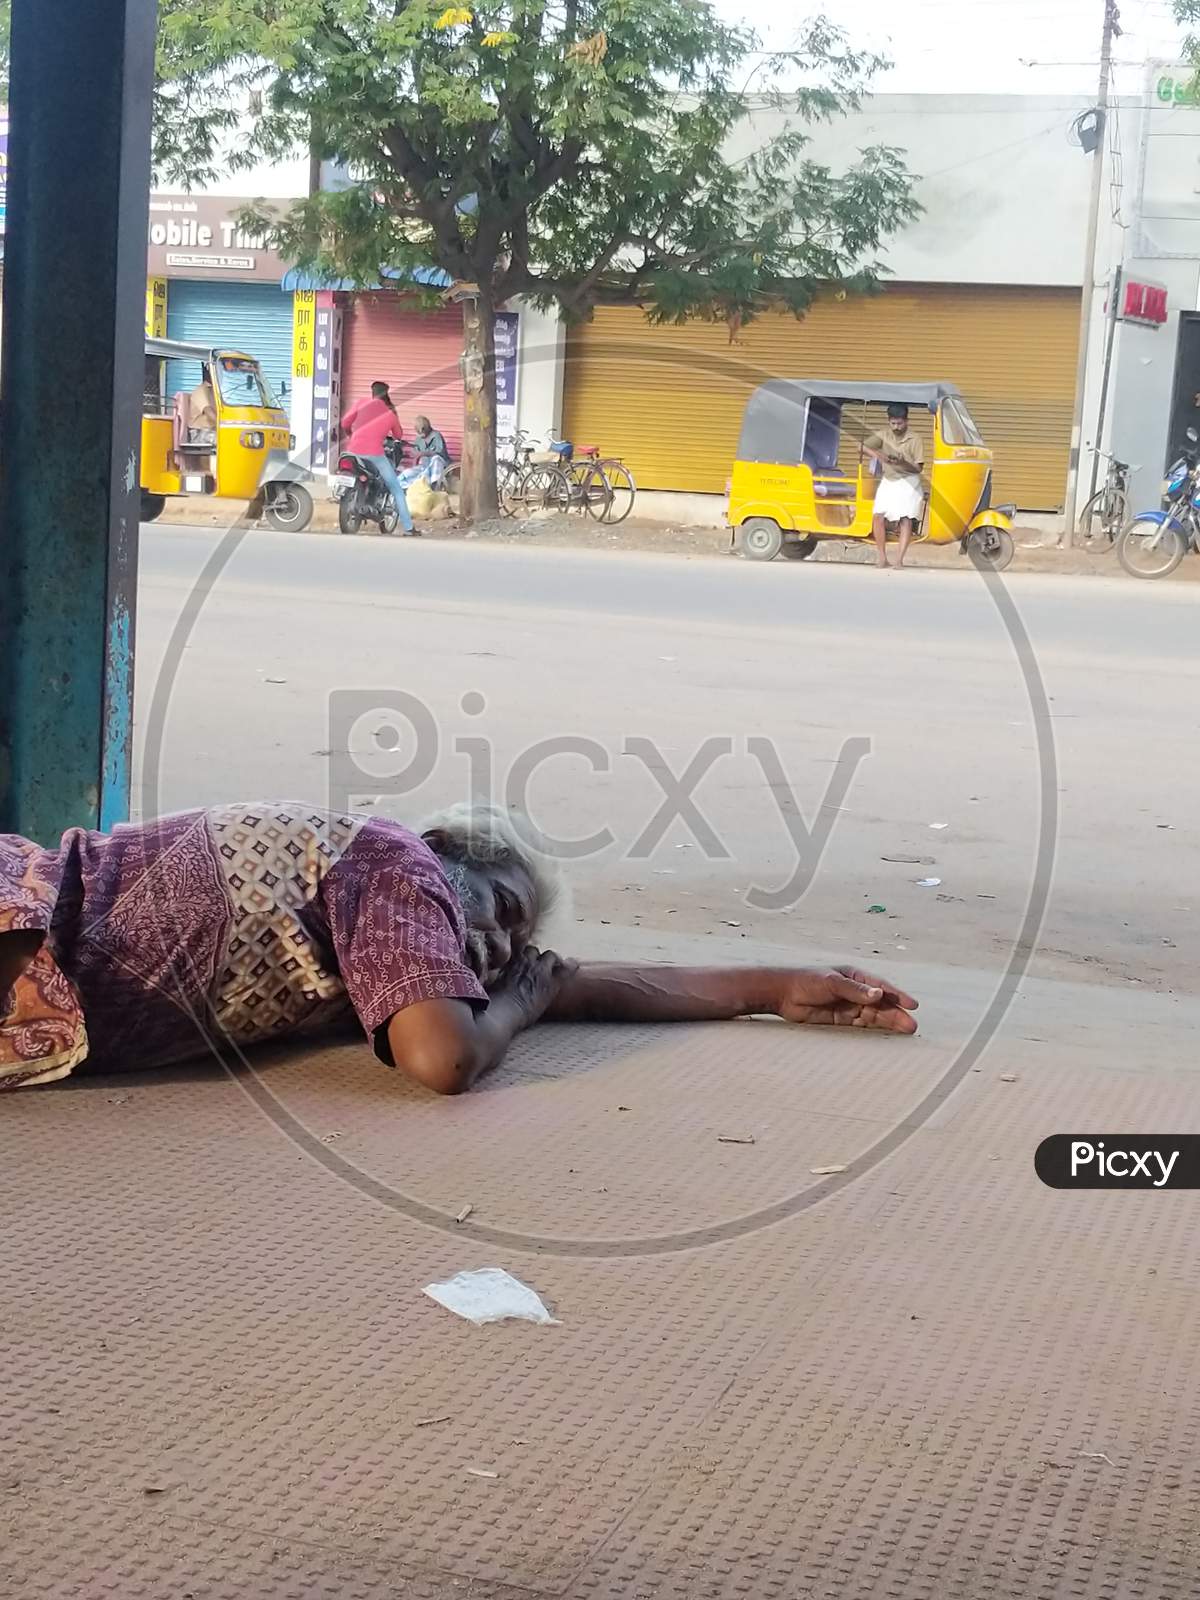 An Indian homeless man sleeping on the floor